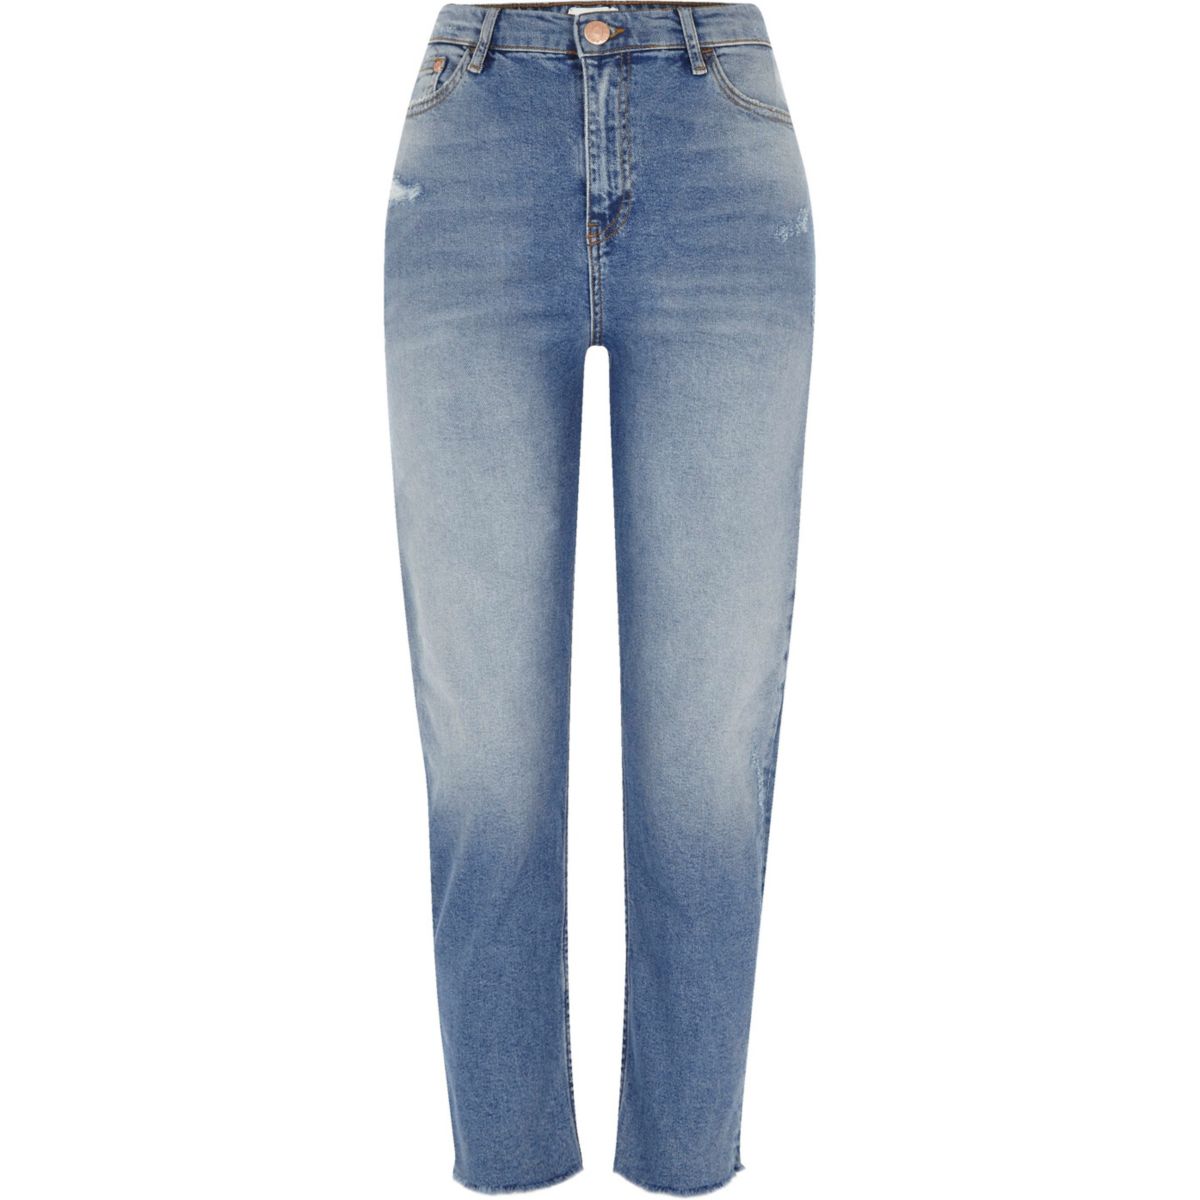 Straight blue jeans womens - zurich Ways bedeutung levis high waisted ...